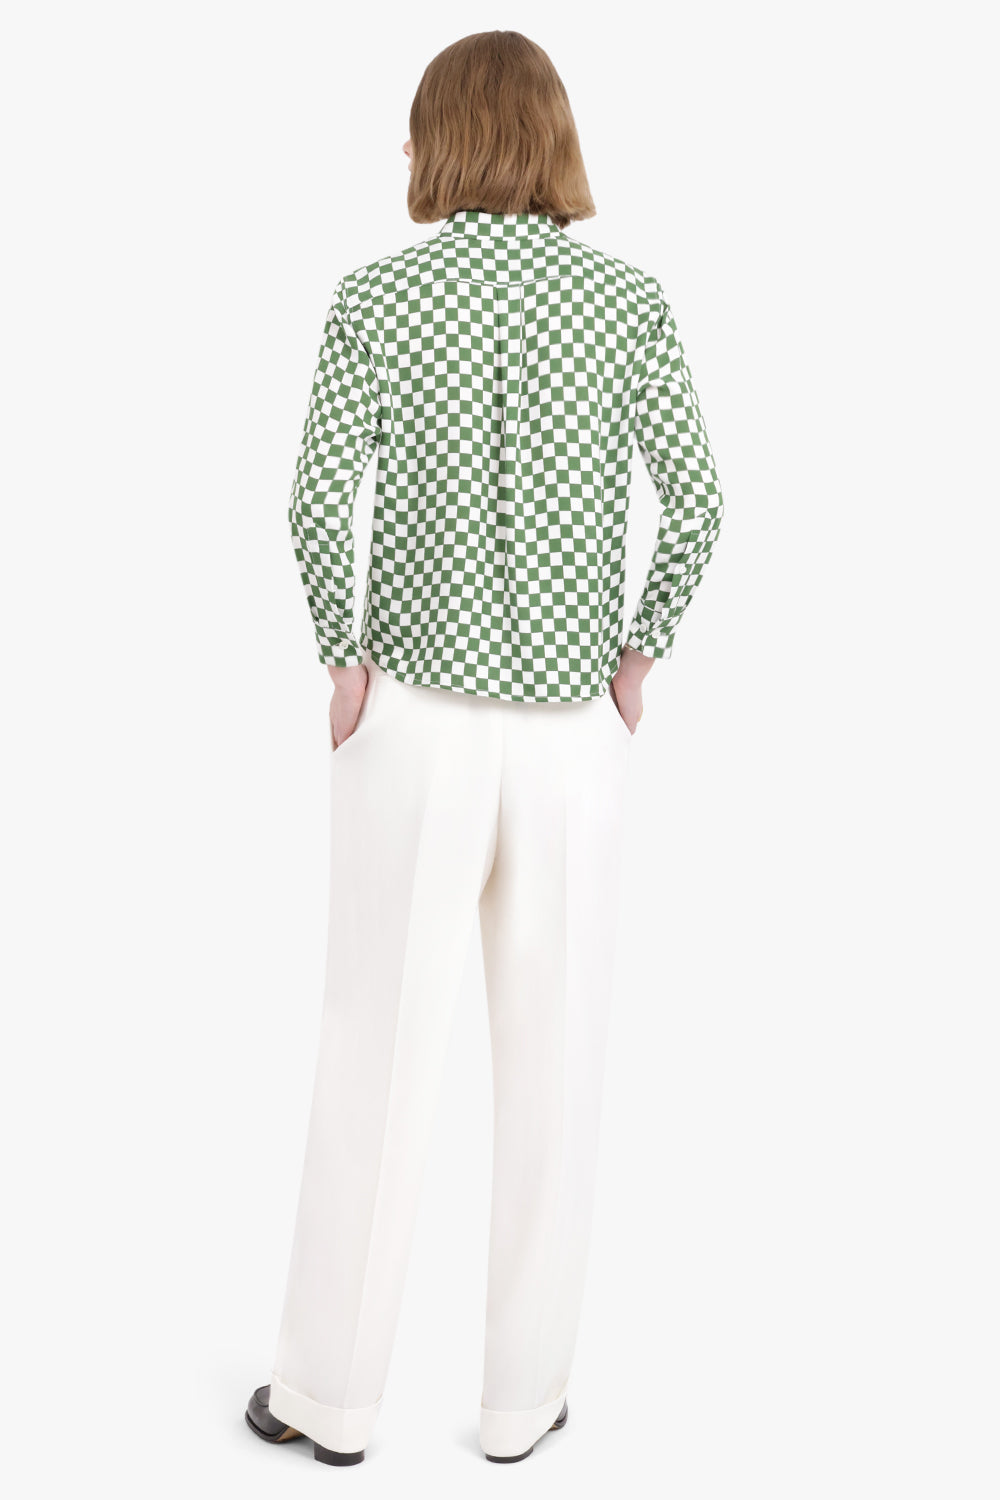 DRIES VAN NOTEN RTW Checkerboard Long Sleeve Shirt | Green